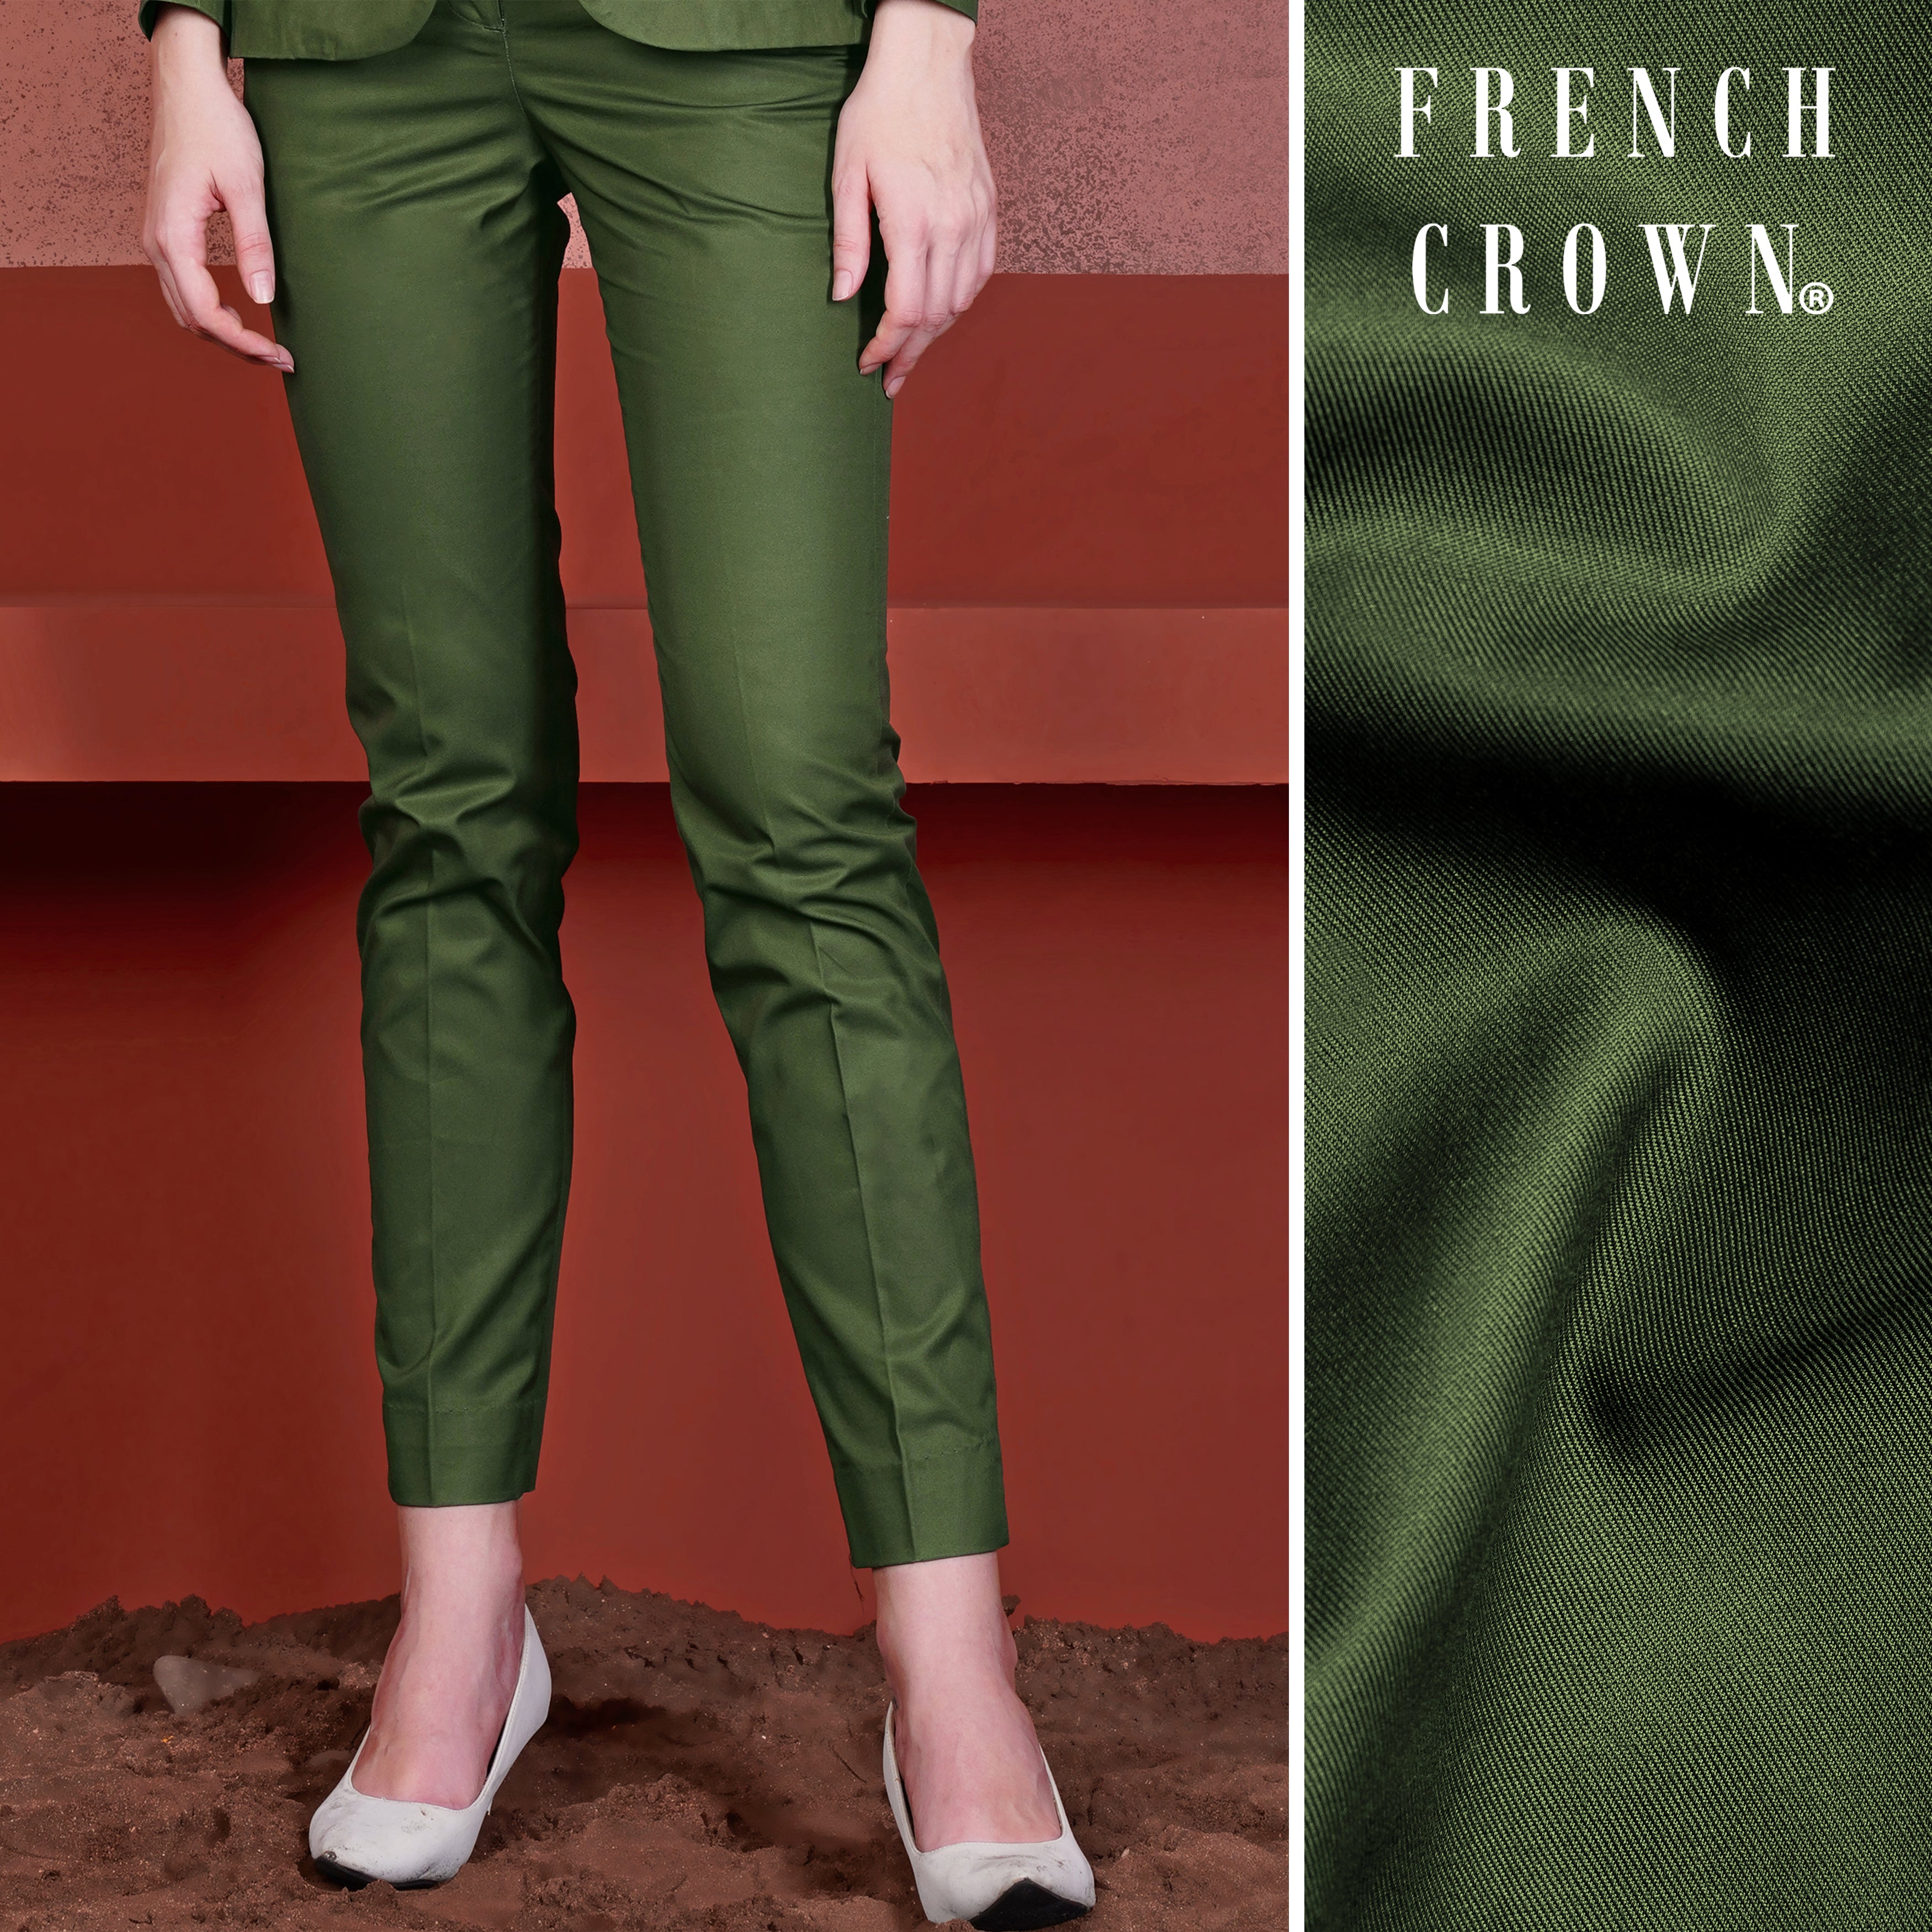 Olive Green Pants Women : Target